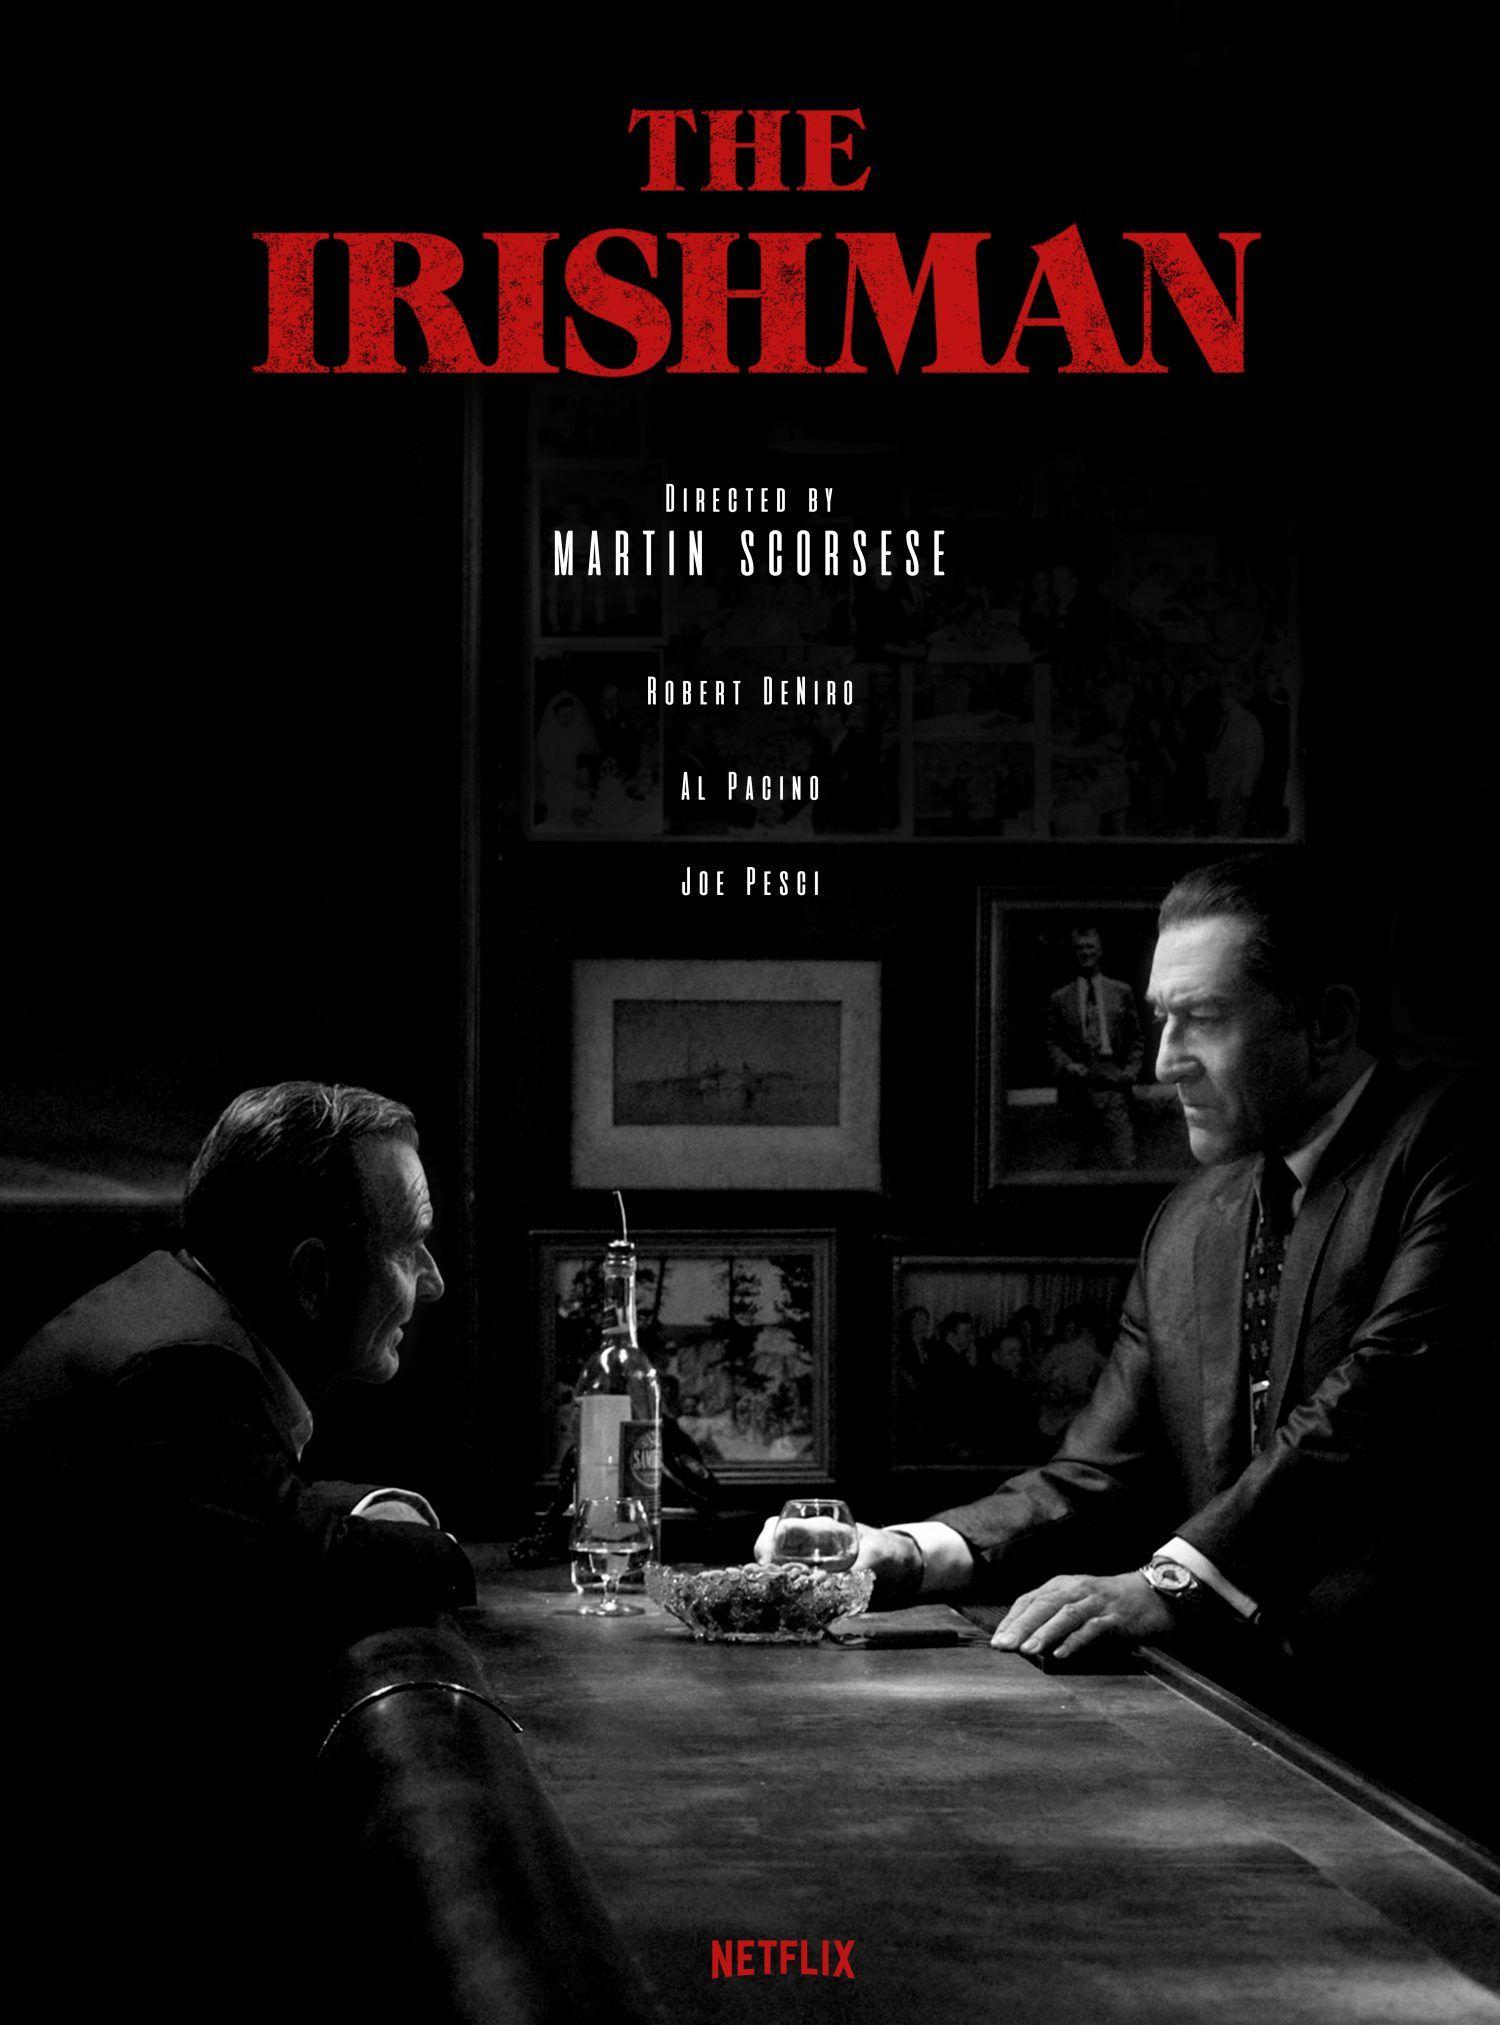 New For Martin Scorsese's 'The Irishman' Has Been